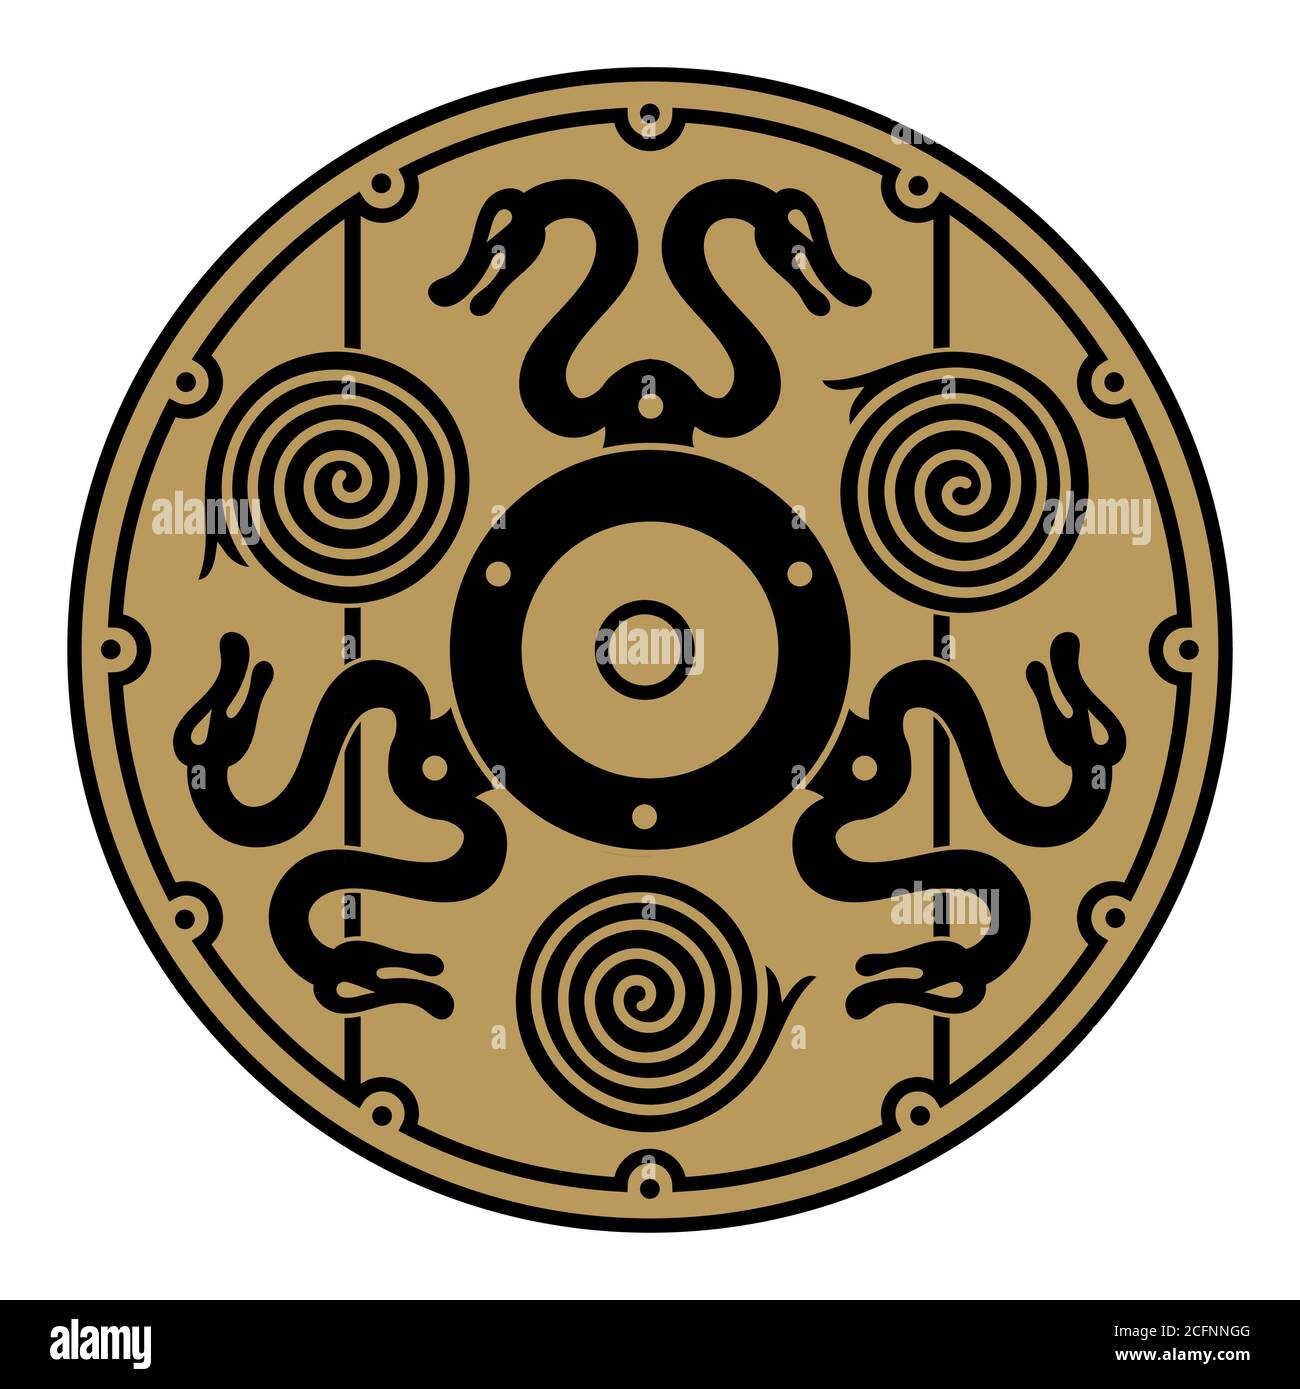 https://c8.alamy.com/compes/2cfnngg/ilustracion-del-antiguo-escudo-vikingo-escandinavo-2cfnngg.jpg